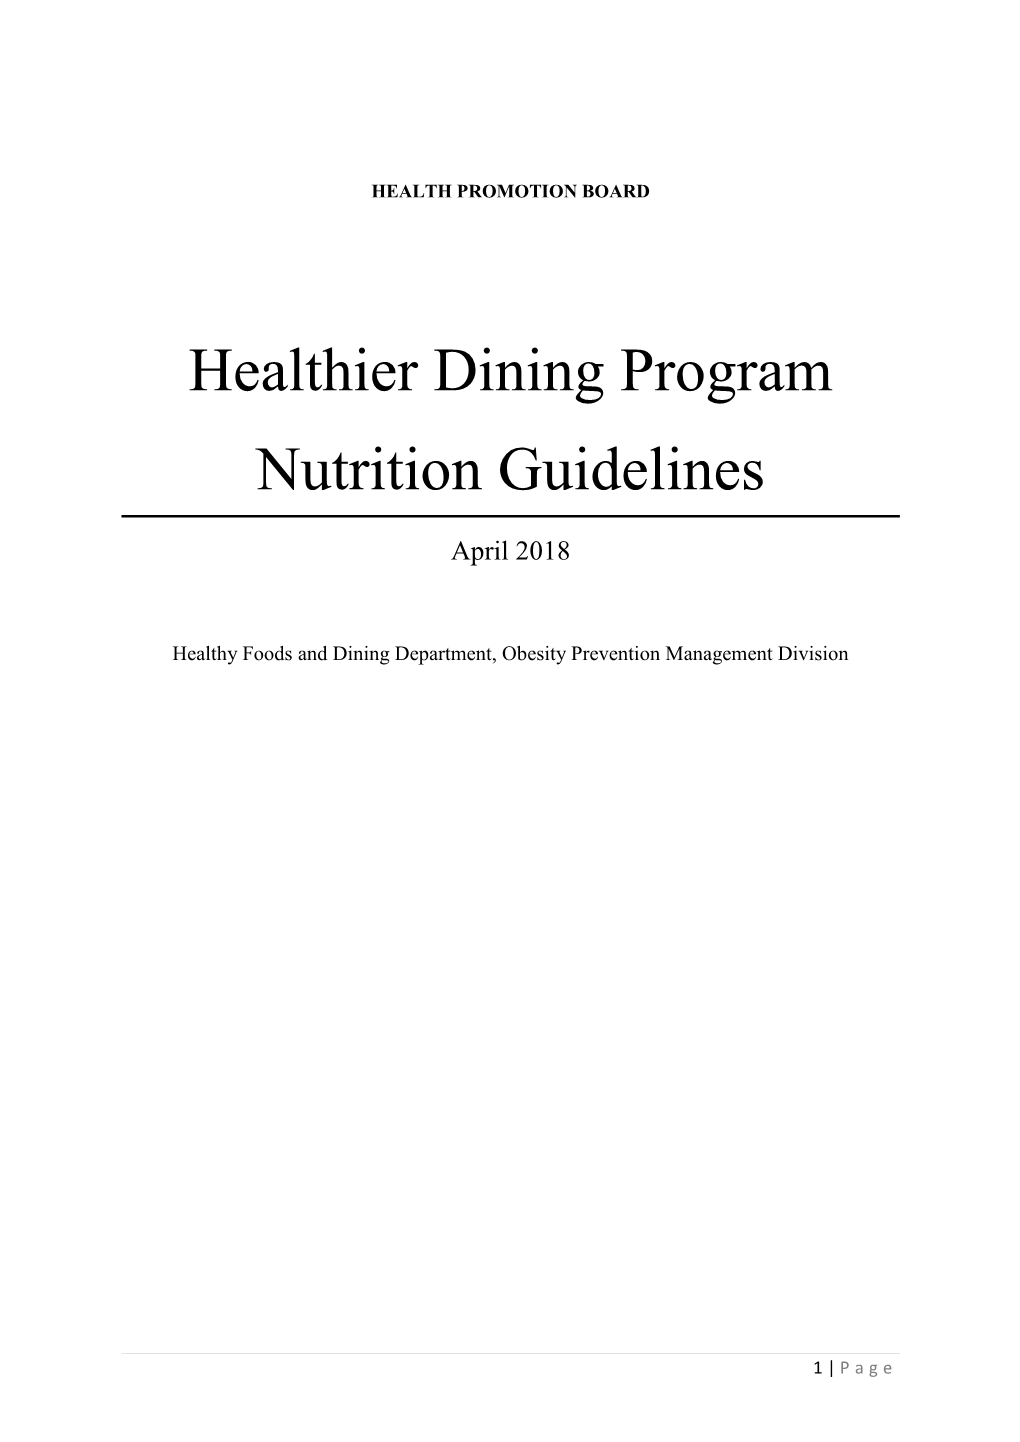 Healthier Dining Program Nutrition Guidelines